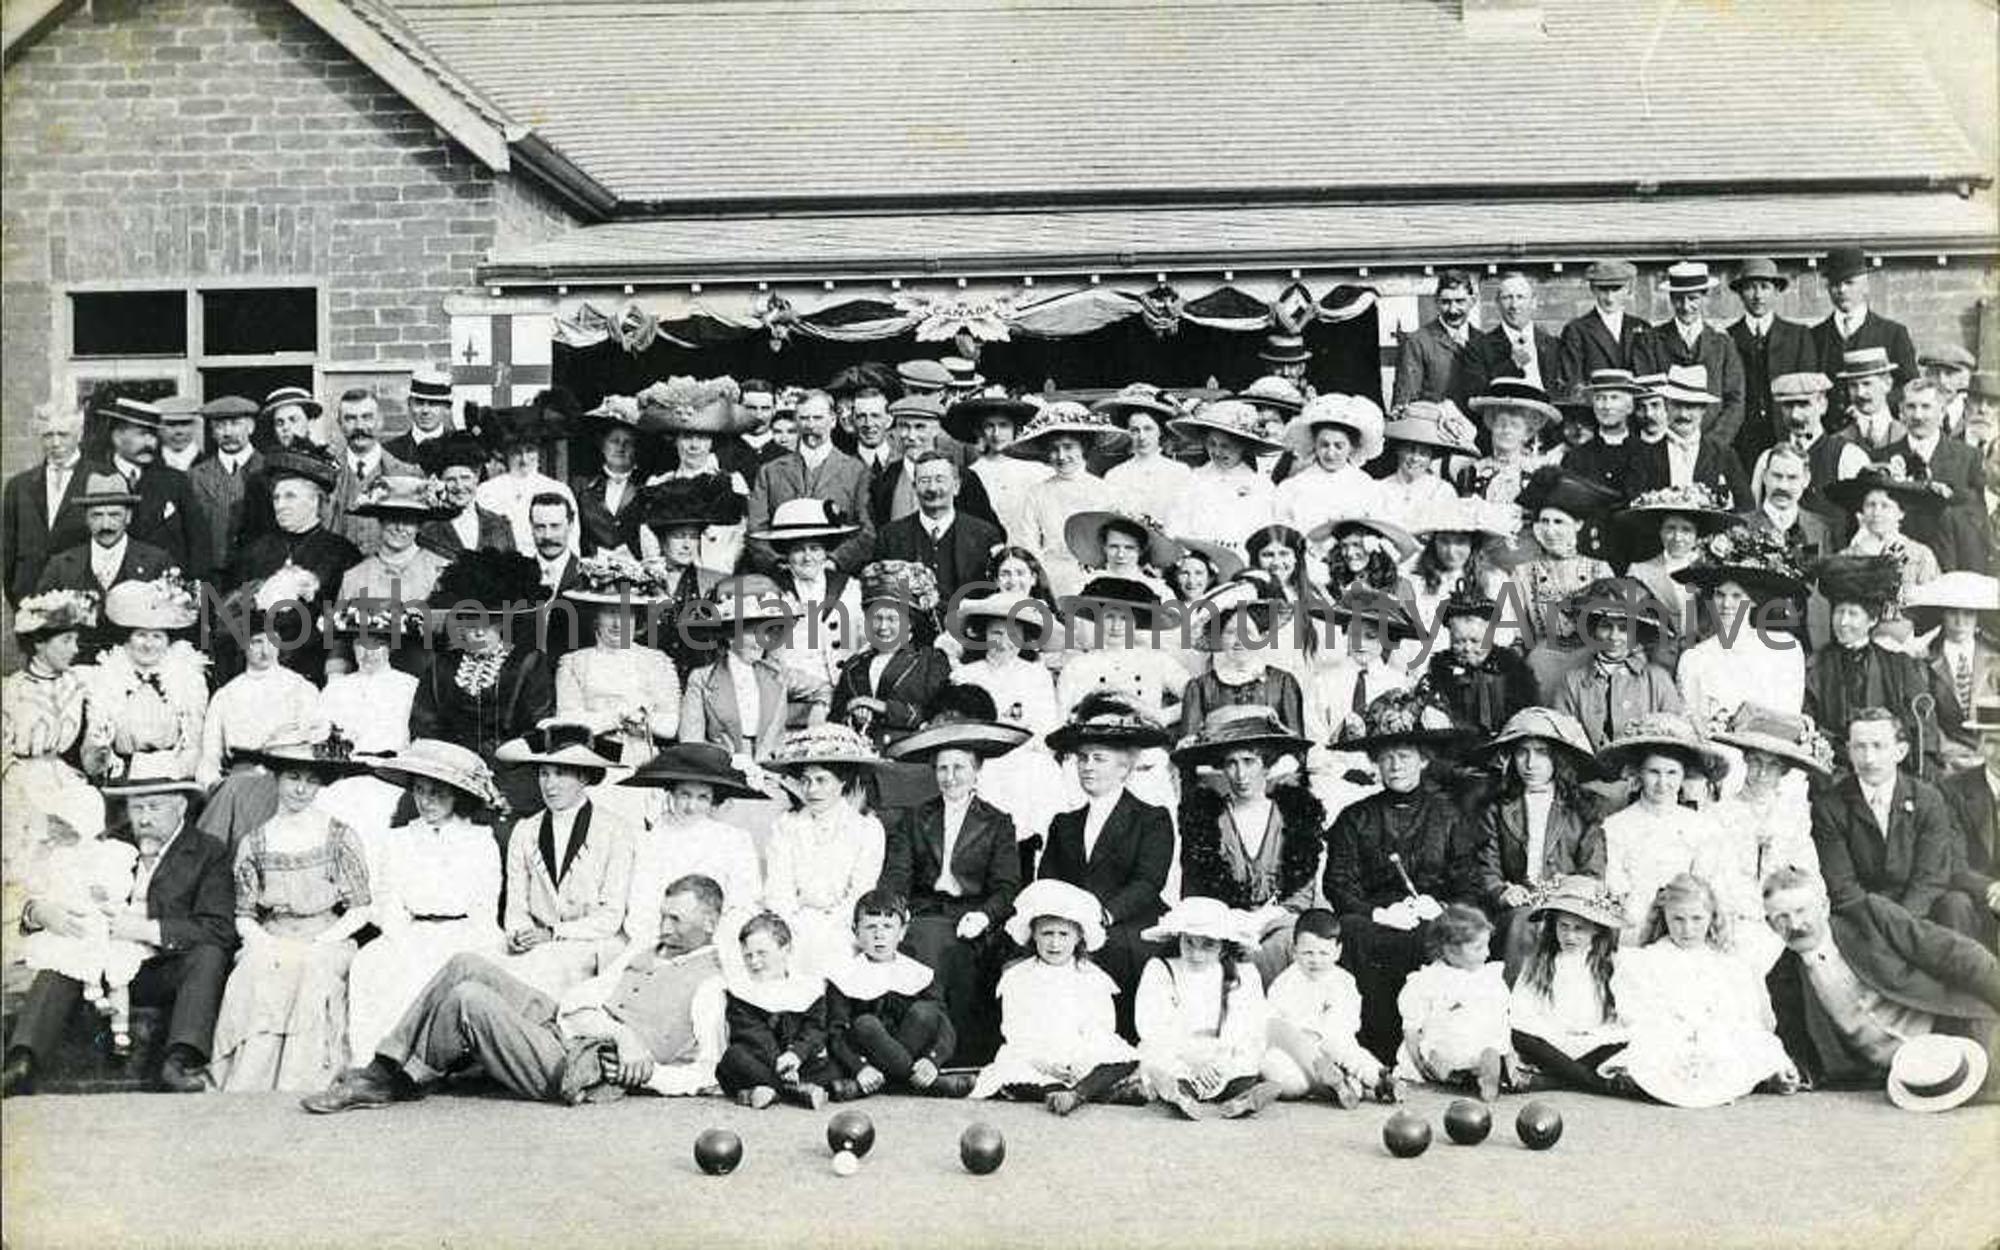 Coleraine Bowling Club (6742)